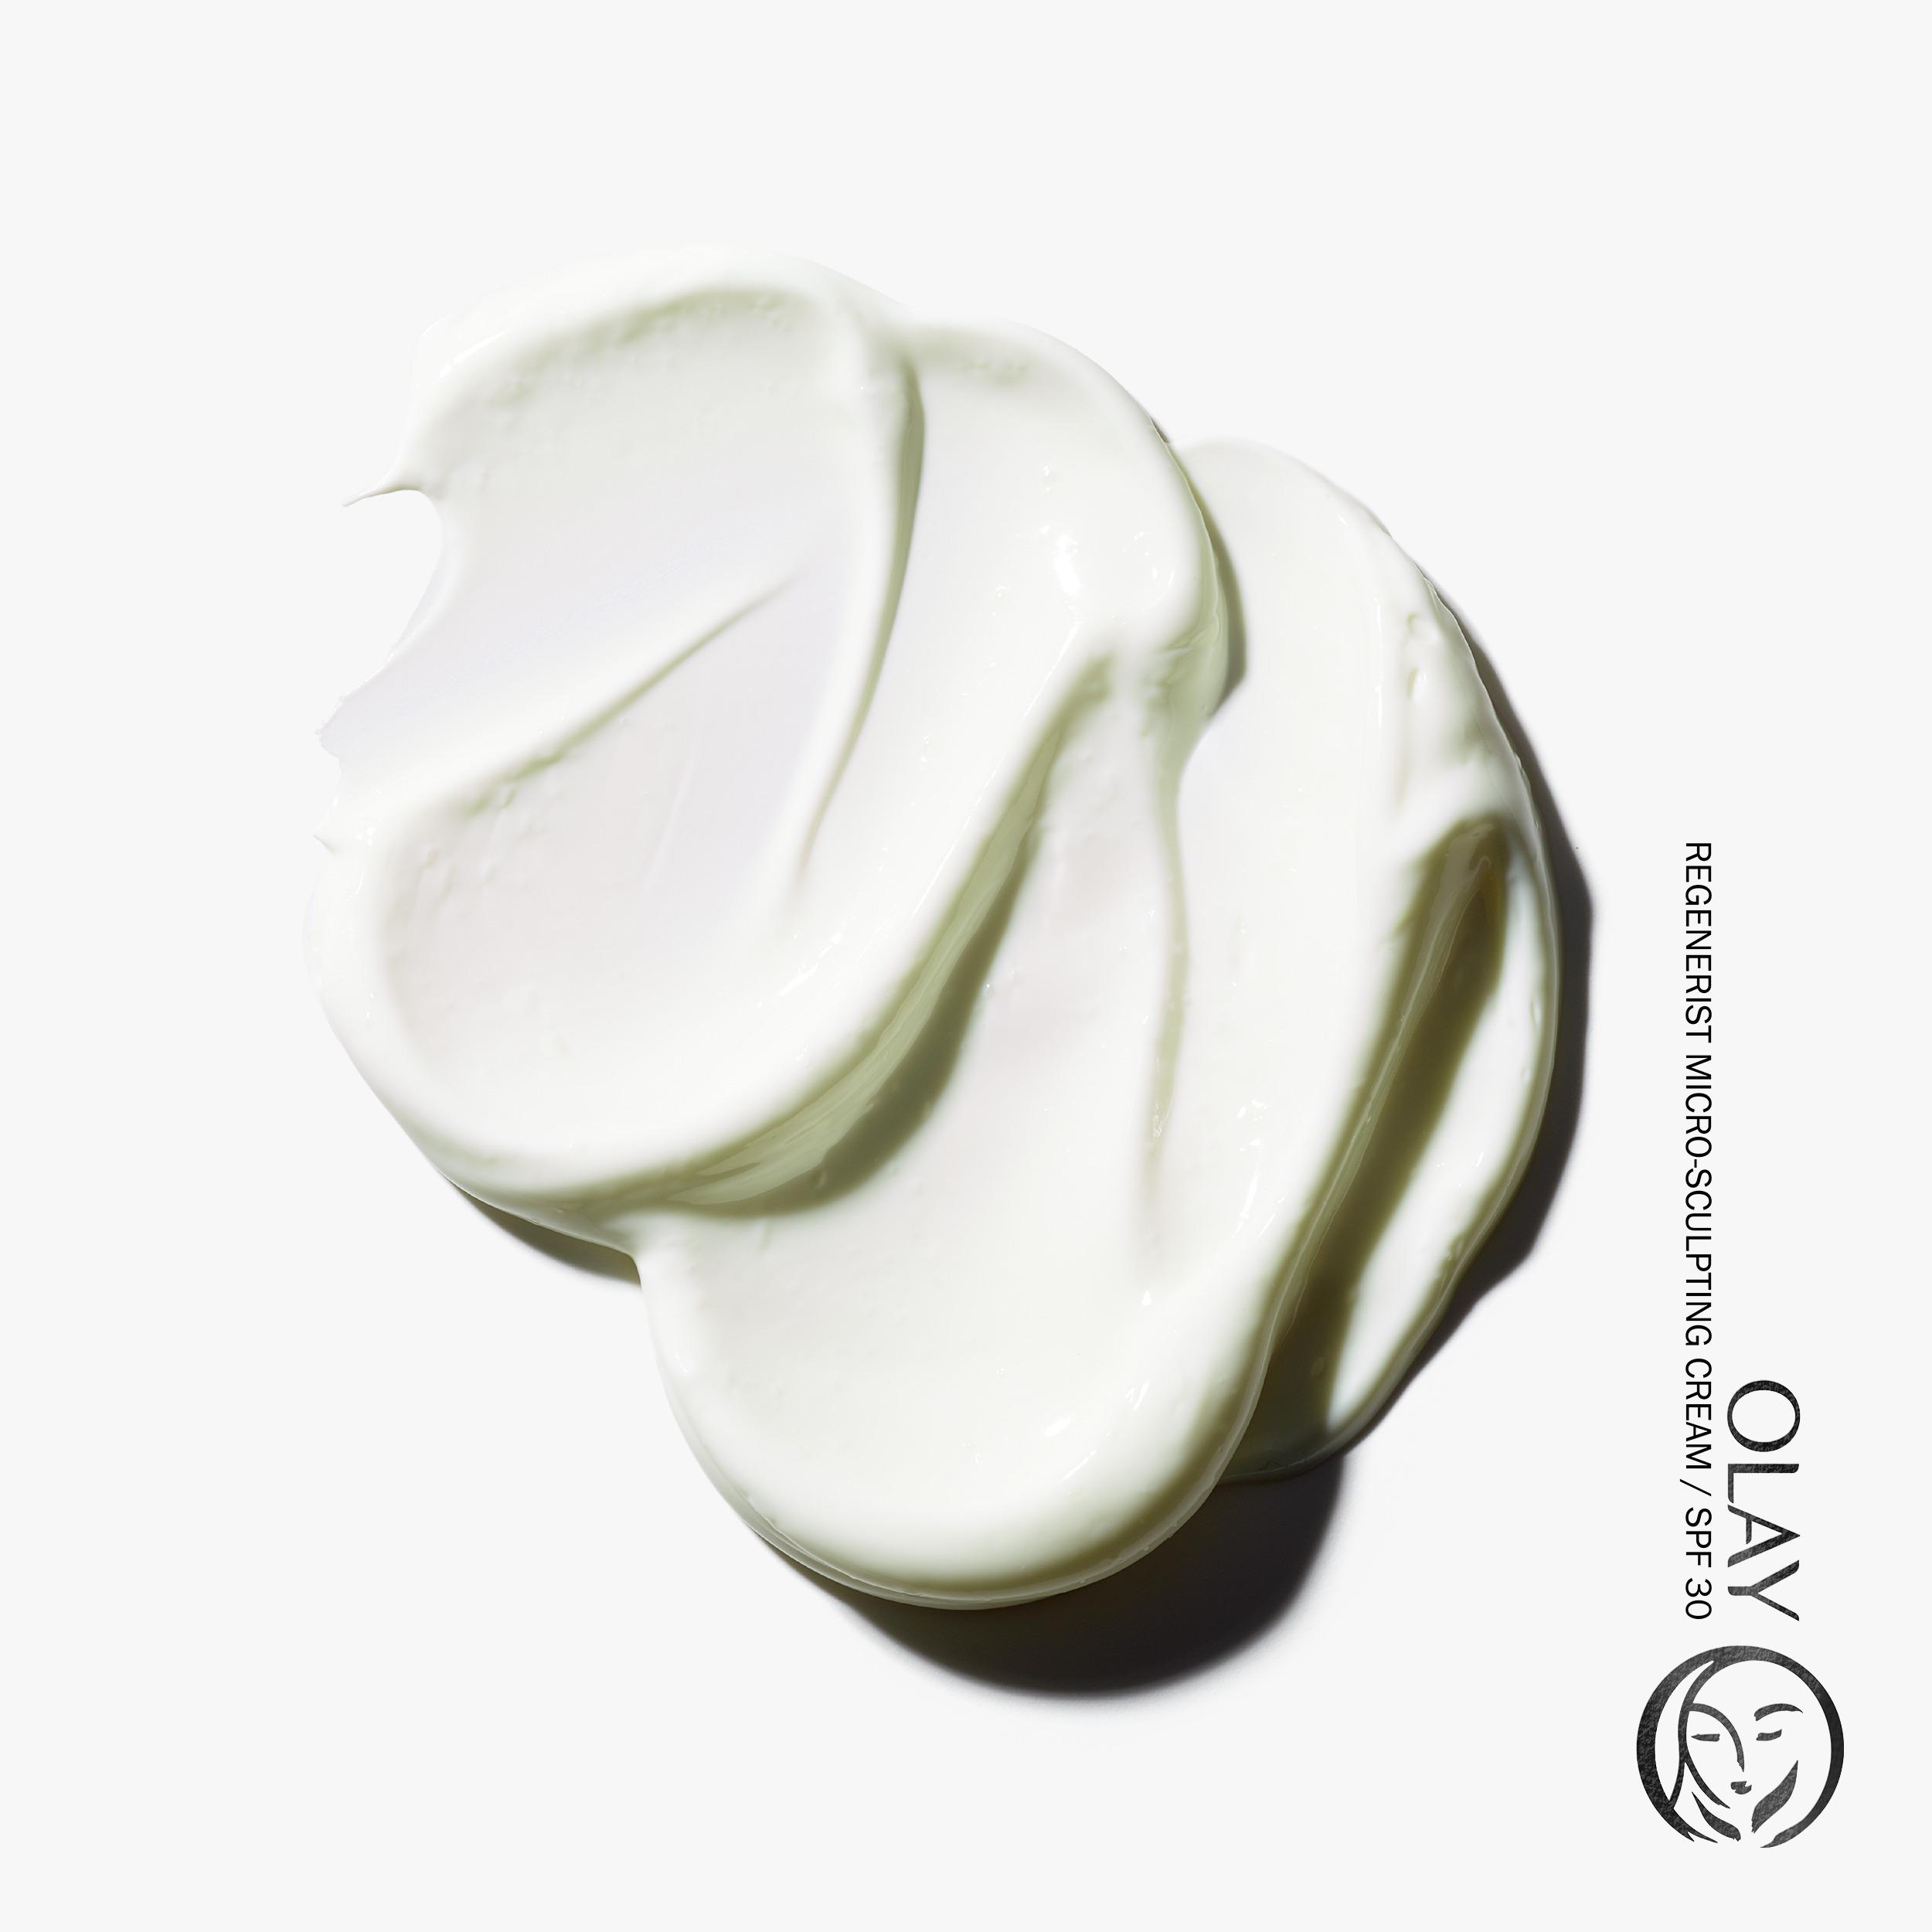 Olay Regenerist Micro-Sculpting Cream Moisturizer, SPF 30 Sun Protection for All Skin Types, 1.7 oz - image 4 of 11